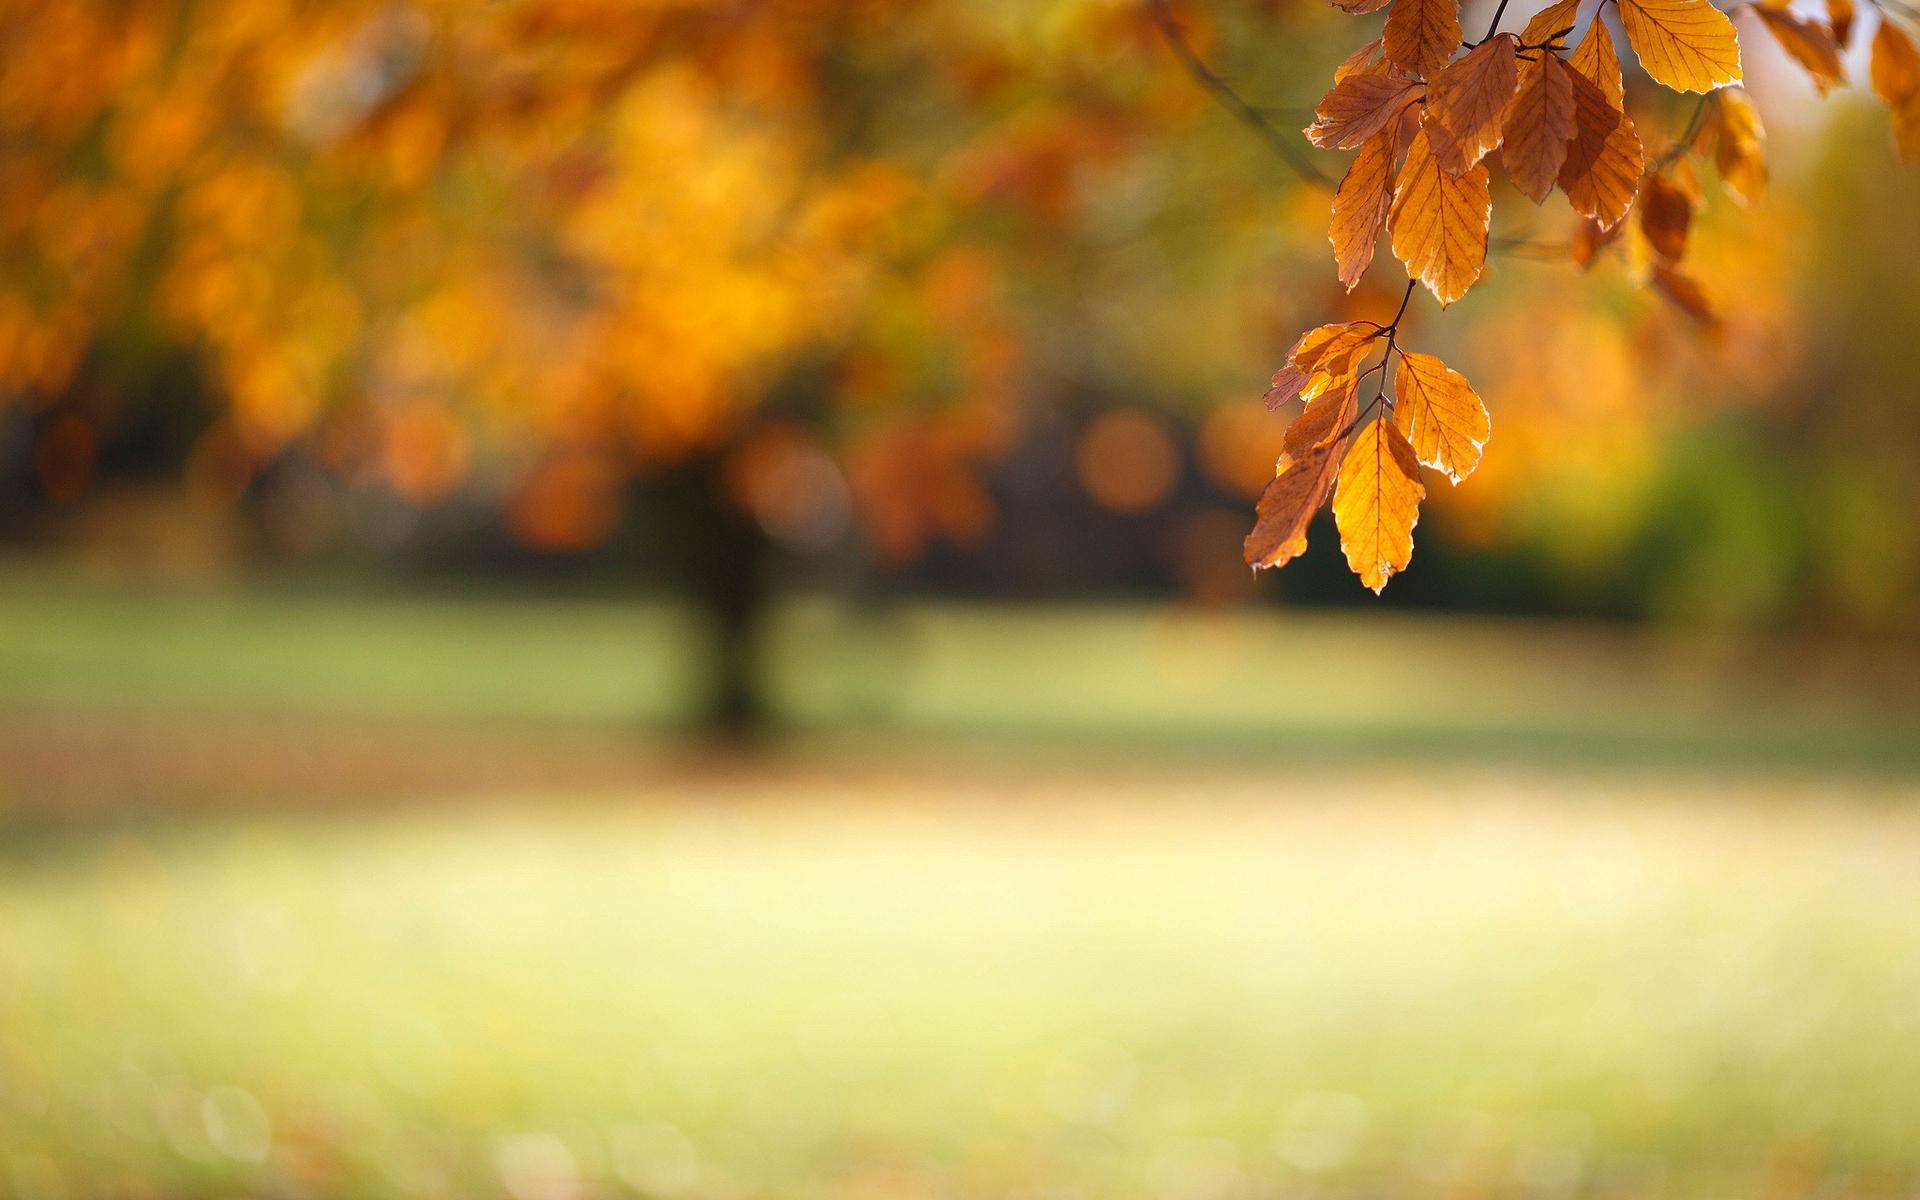 Blurred autumn wallpaper | nature and landscape | Wallpaper Better